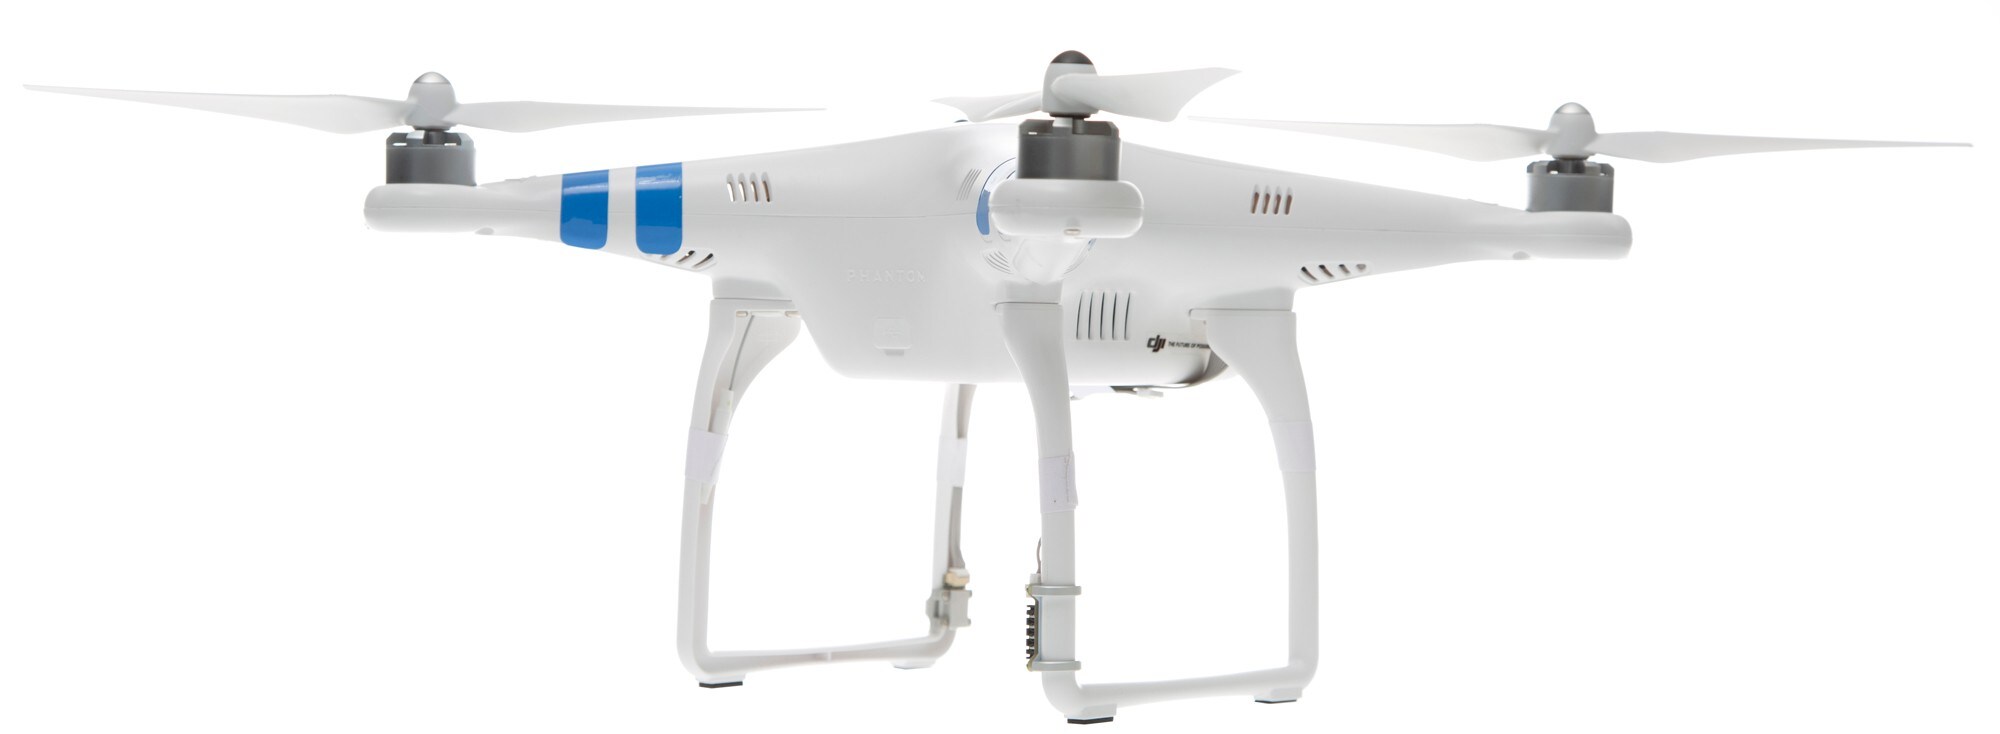 DJI Phantom 2 drone - Droner og tilbehør - Elgiganten